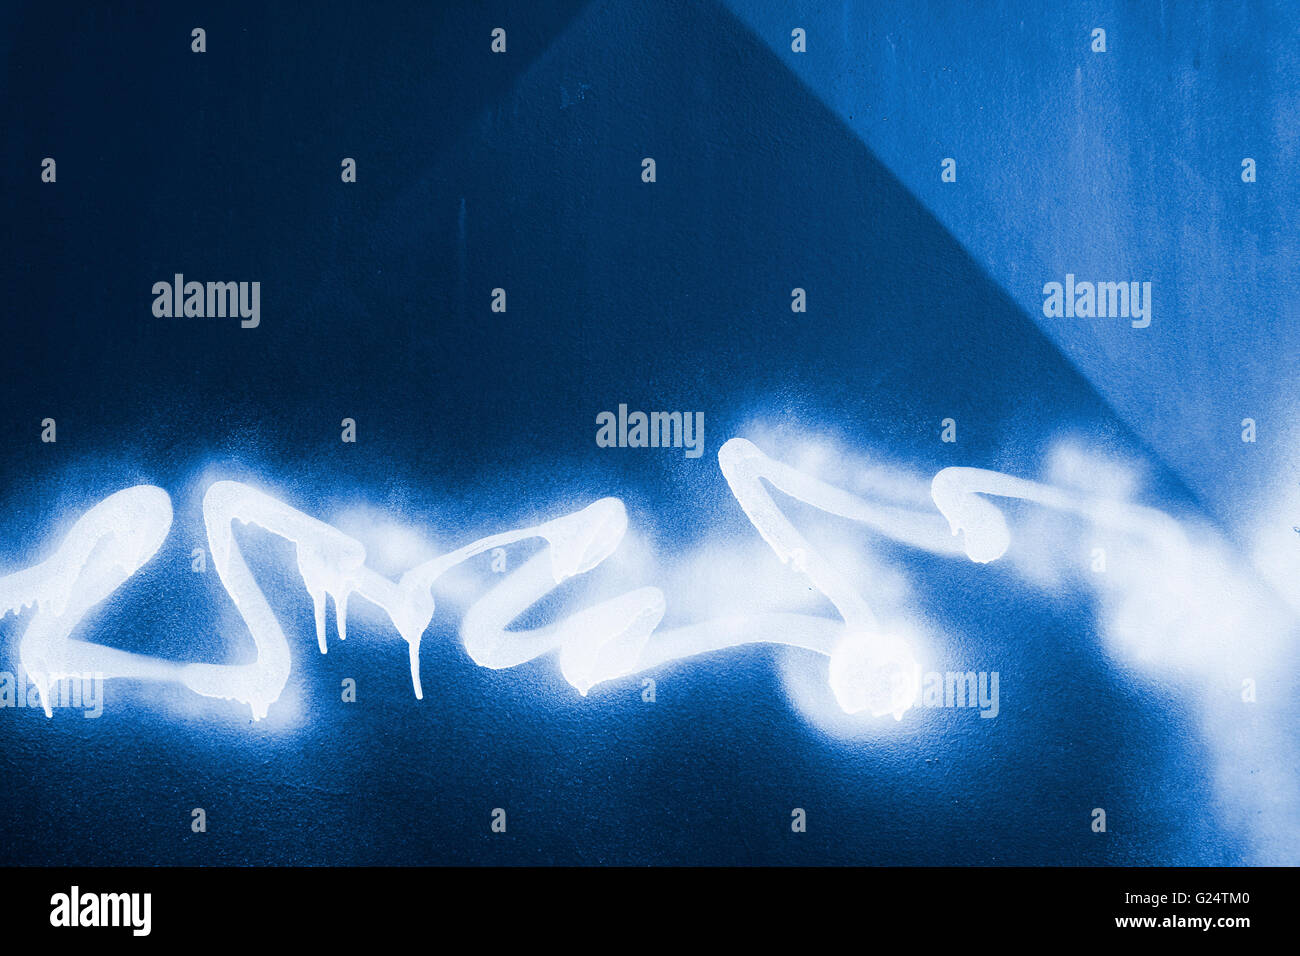 White sprayed graffiti on a blue metal background Stock Photo